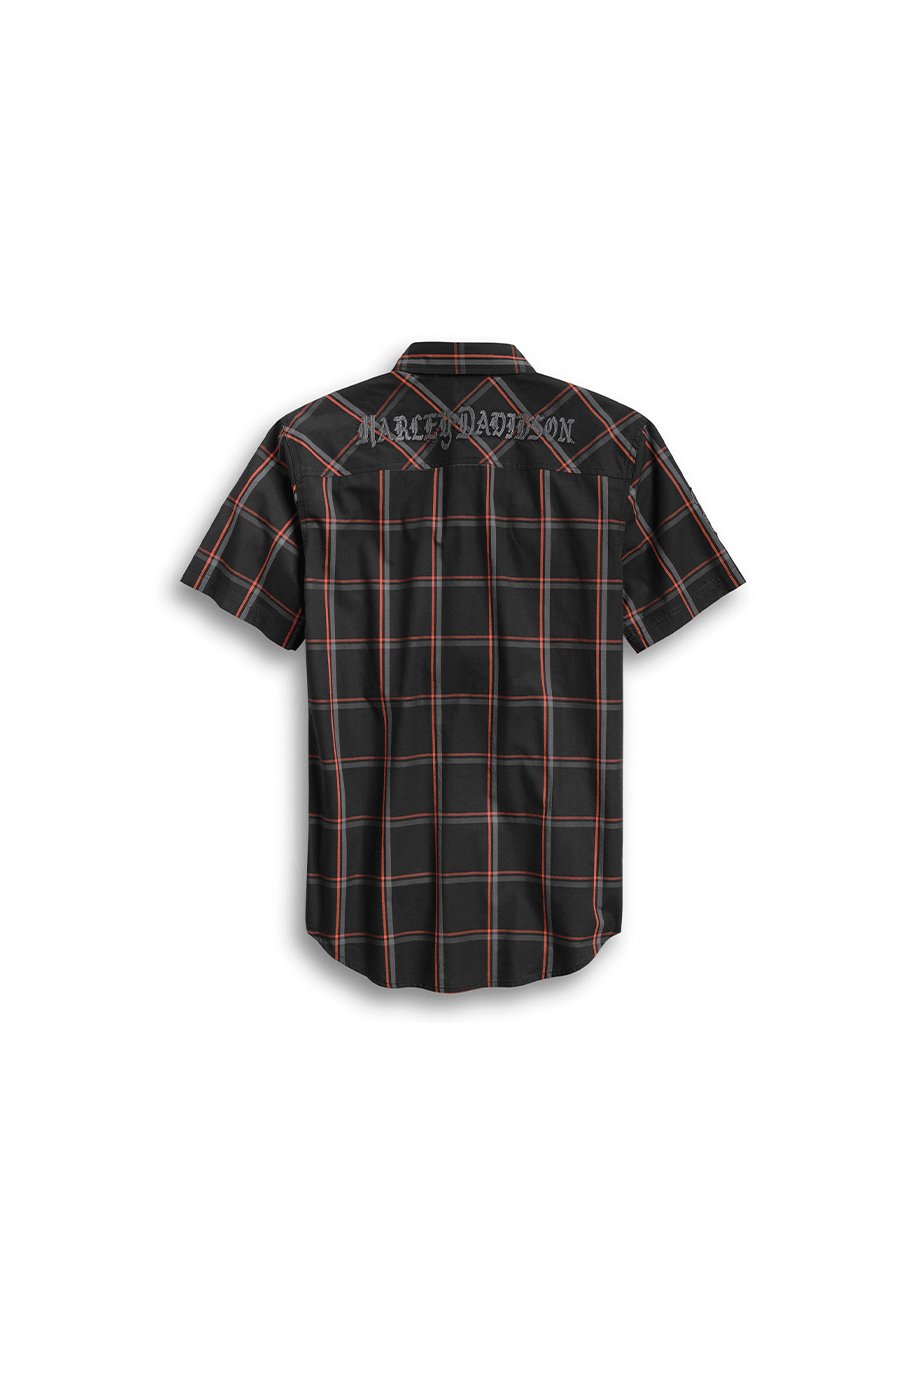 Harley-Davidson® Shirt-Woven, Plaid